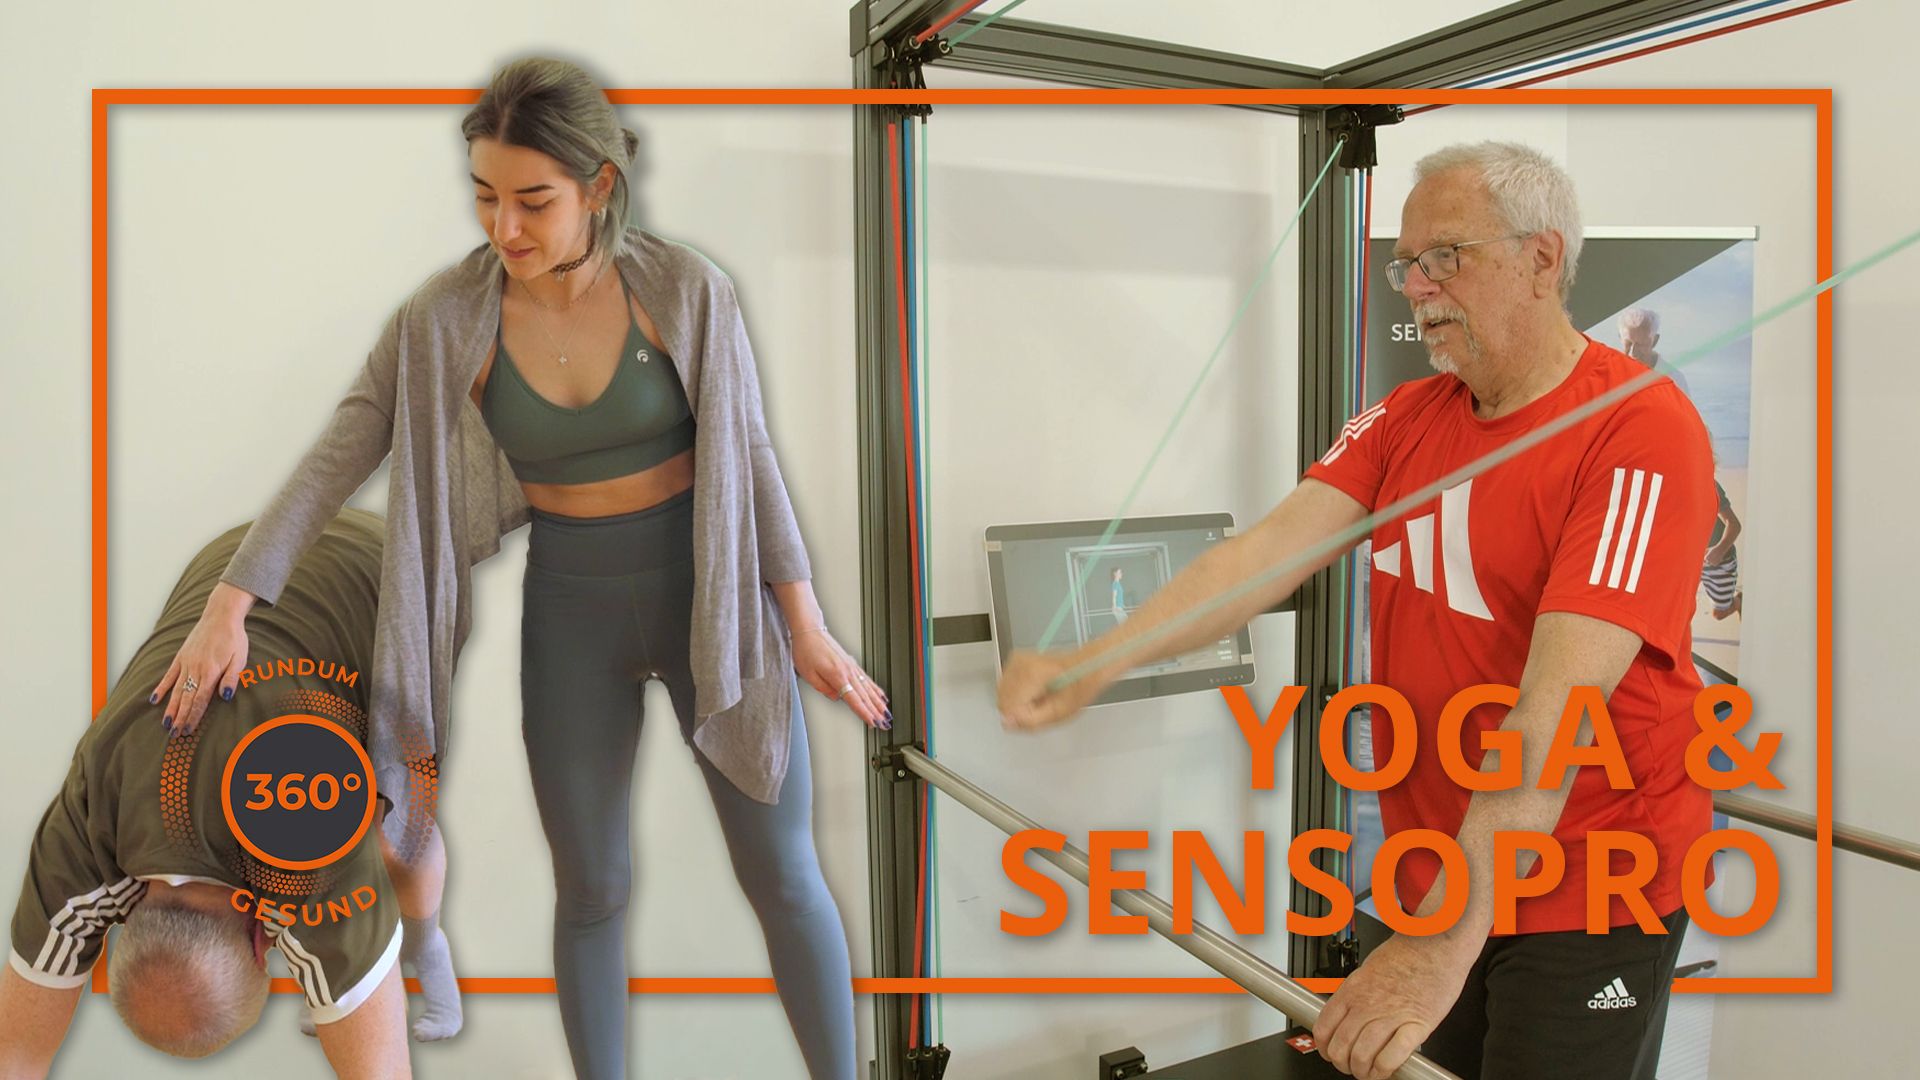 360° - Rundum gesund: Yoga & SensoPro (Folge 9)